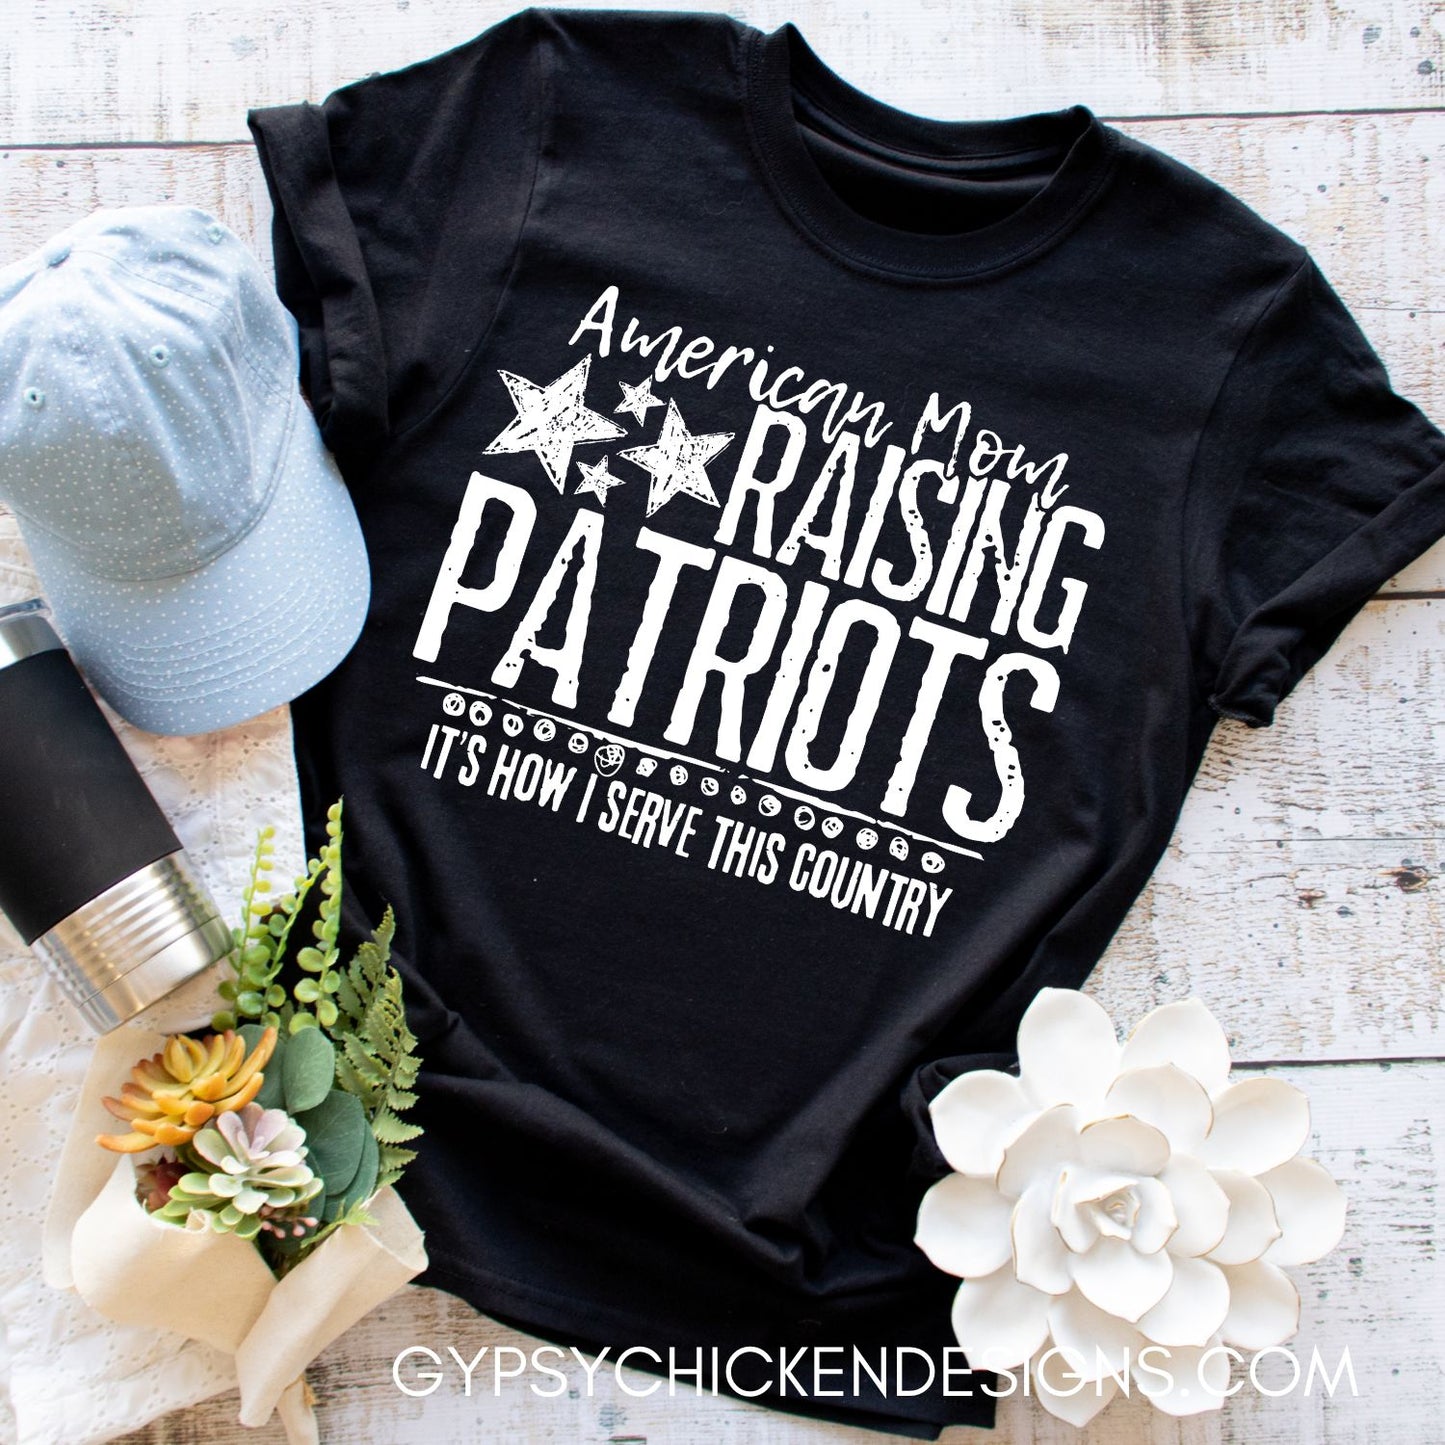 American Mom Raising Patriots